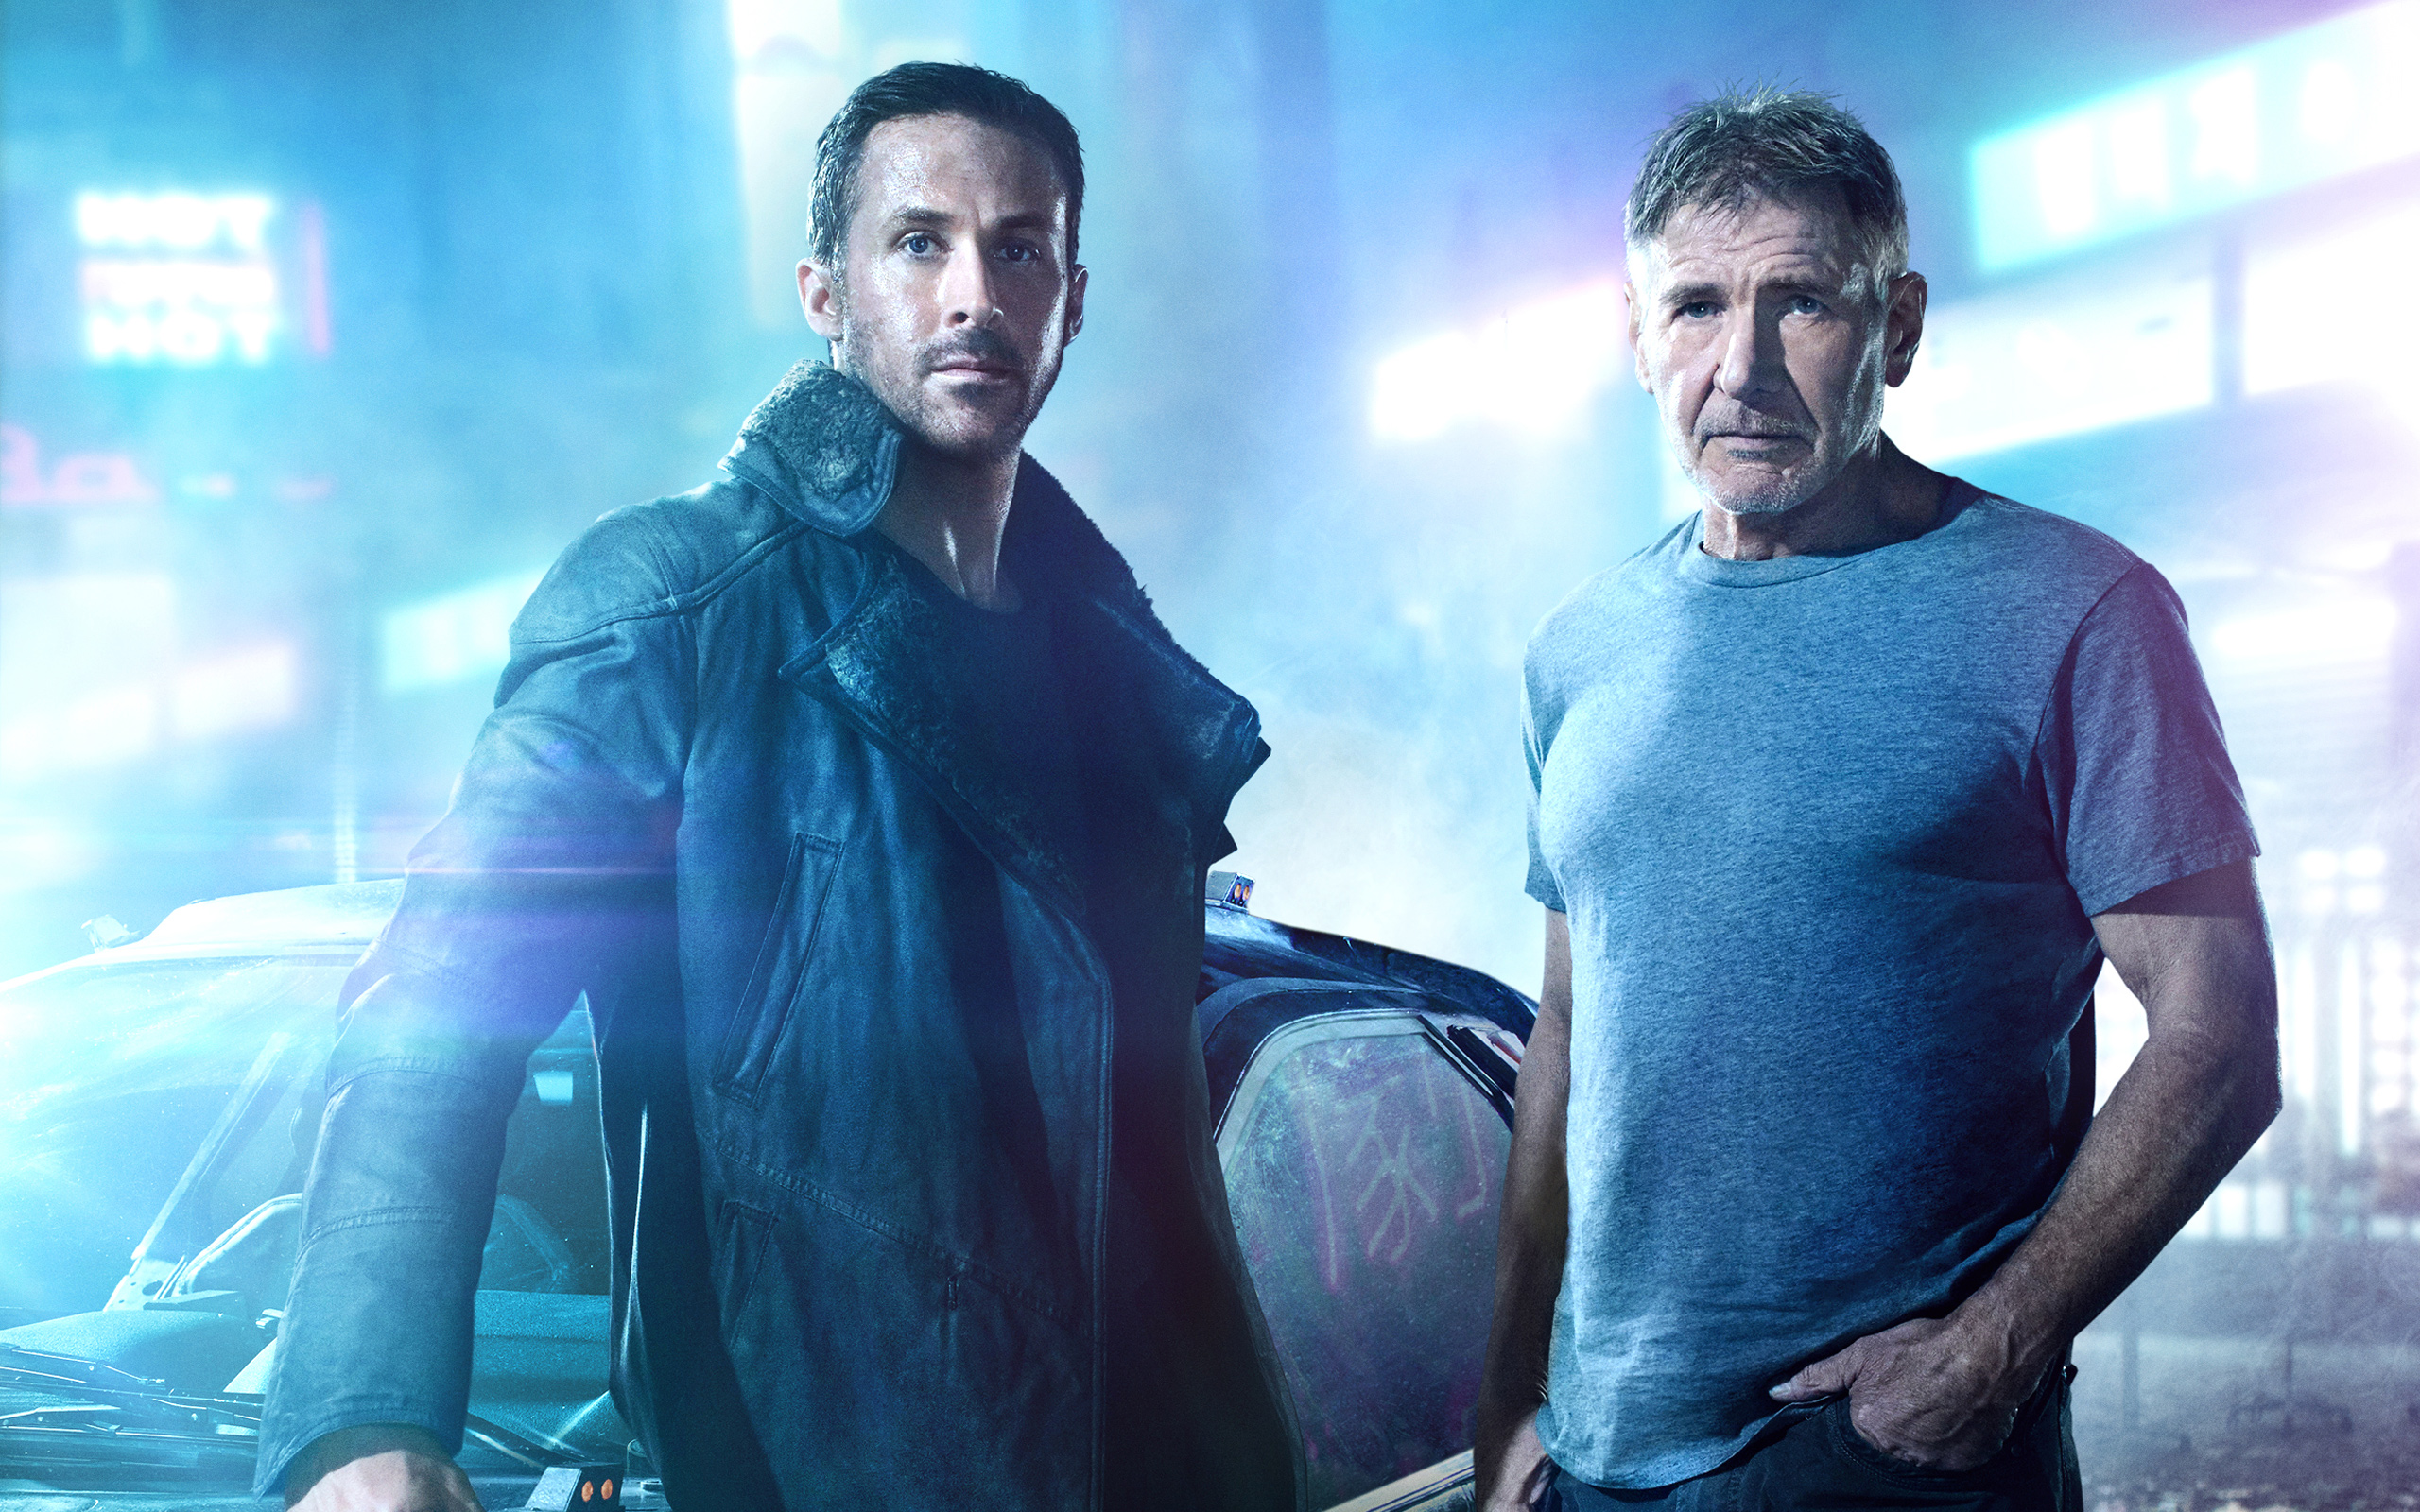 People 2560x1600 Blade Runner 2049 science fiction cyberpunk Ryan Gosling Harrison Ford Blade Runner Officer K Rick Deckard actor movies movie characters men